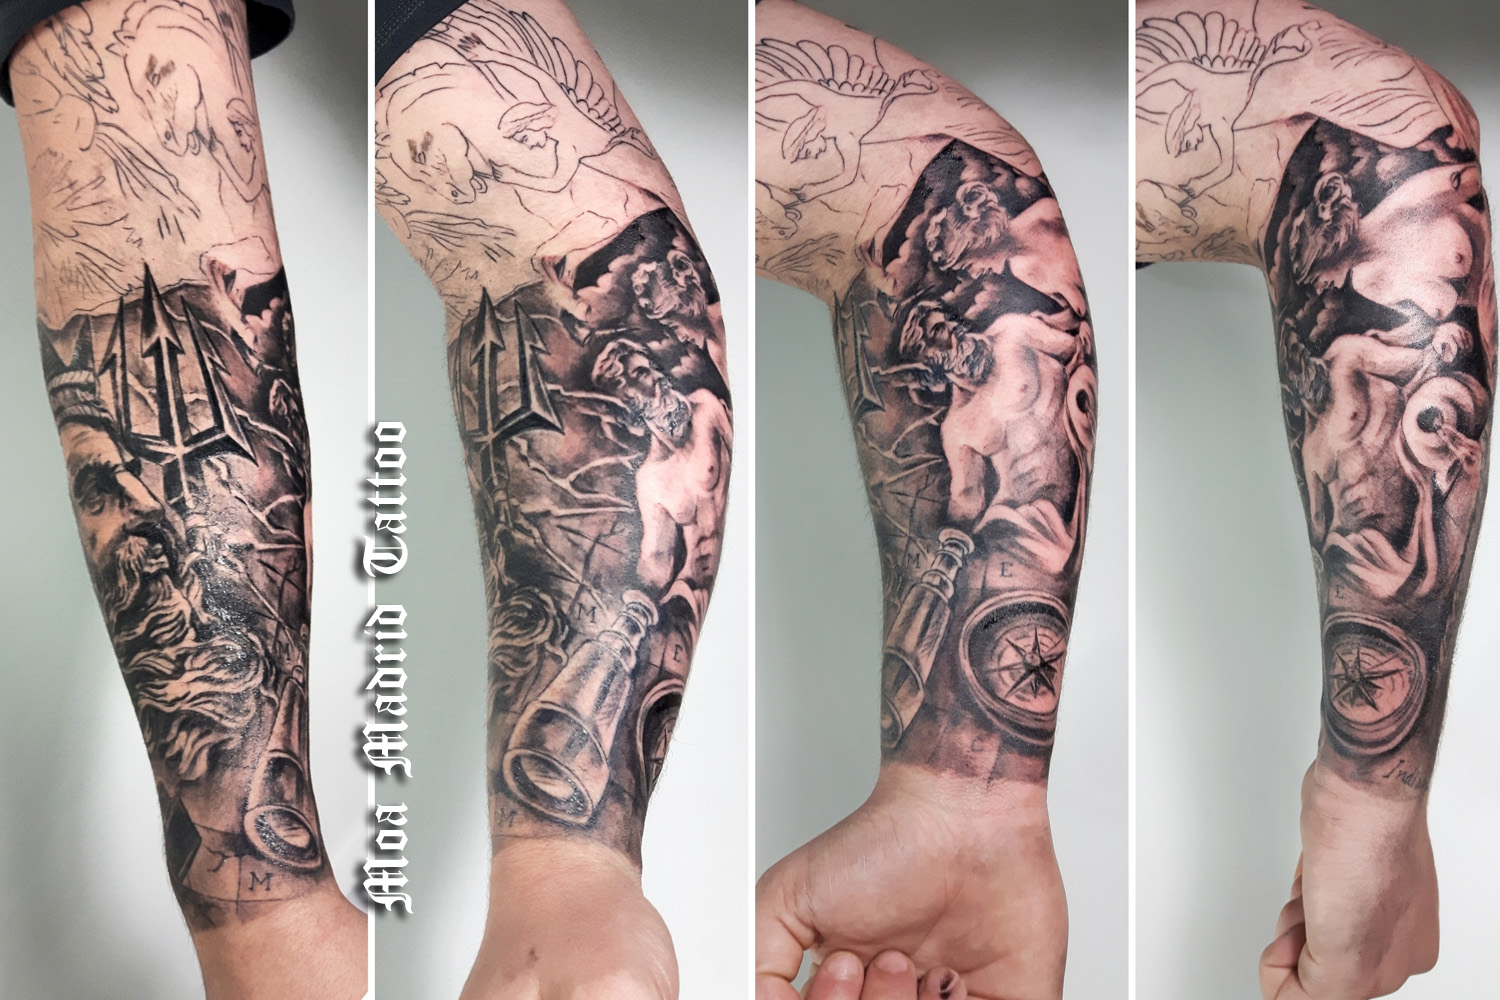 Brazo entero tatuado con esculturas en realismo | Moa Madrid Tattoo